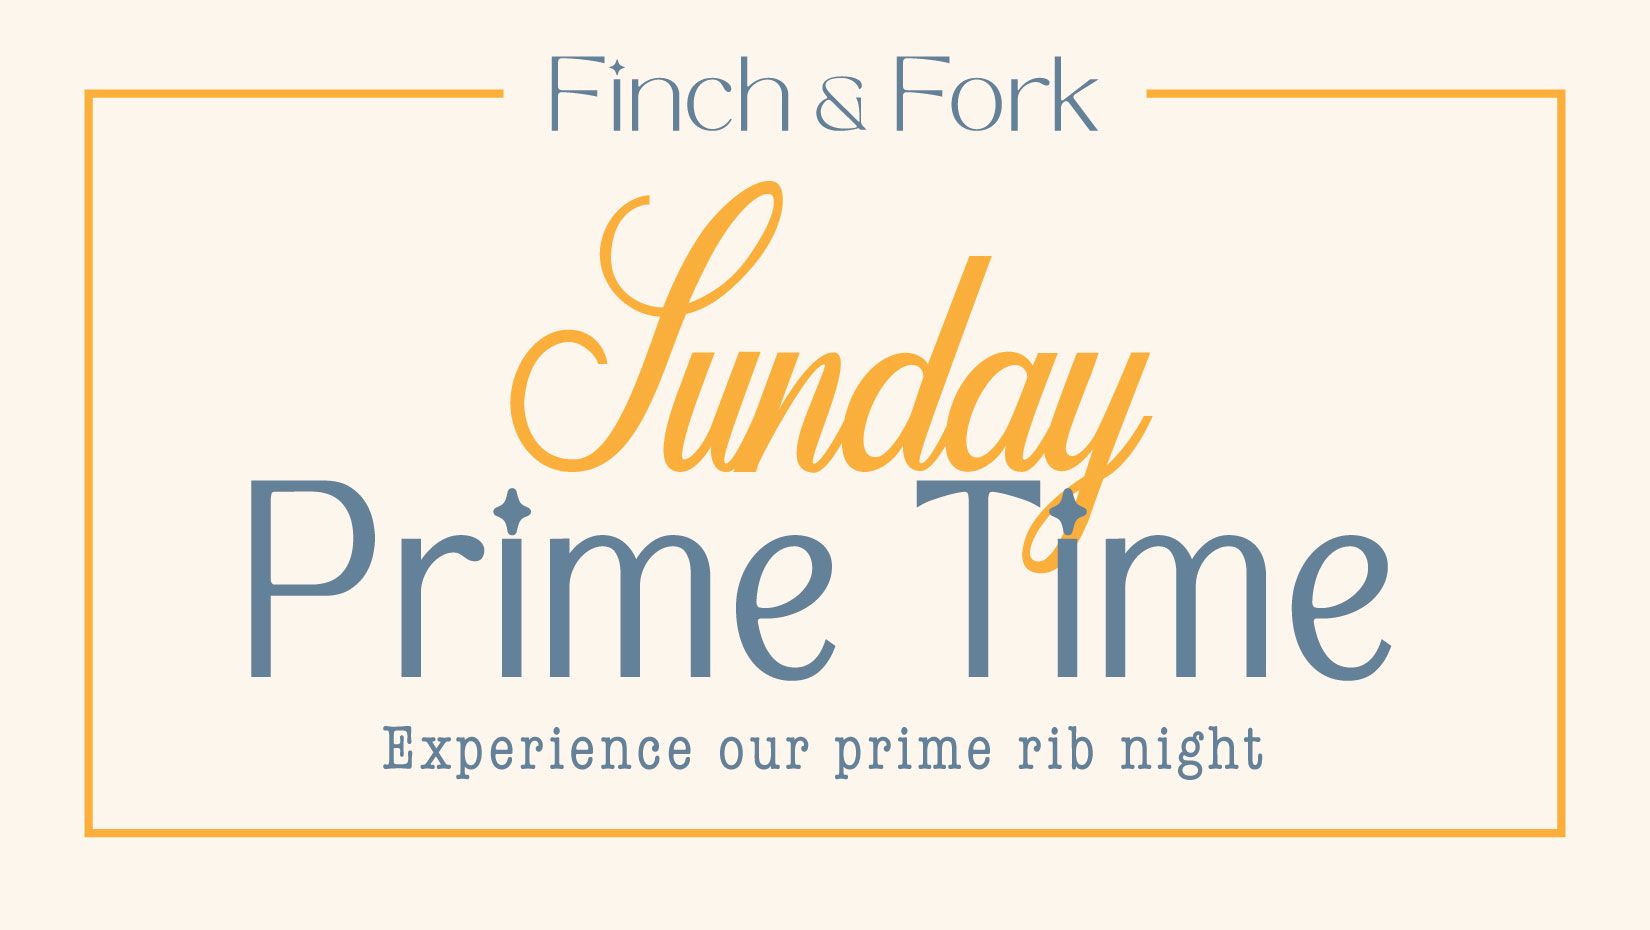 Finch + Fork Sunday Prime Time